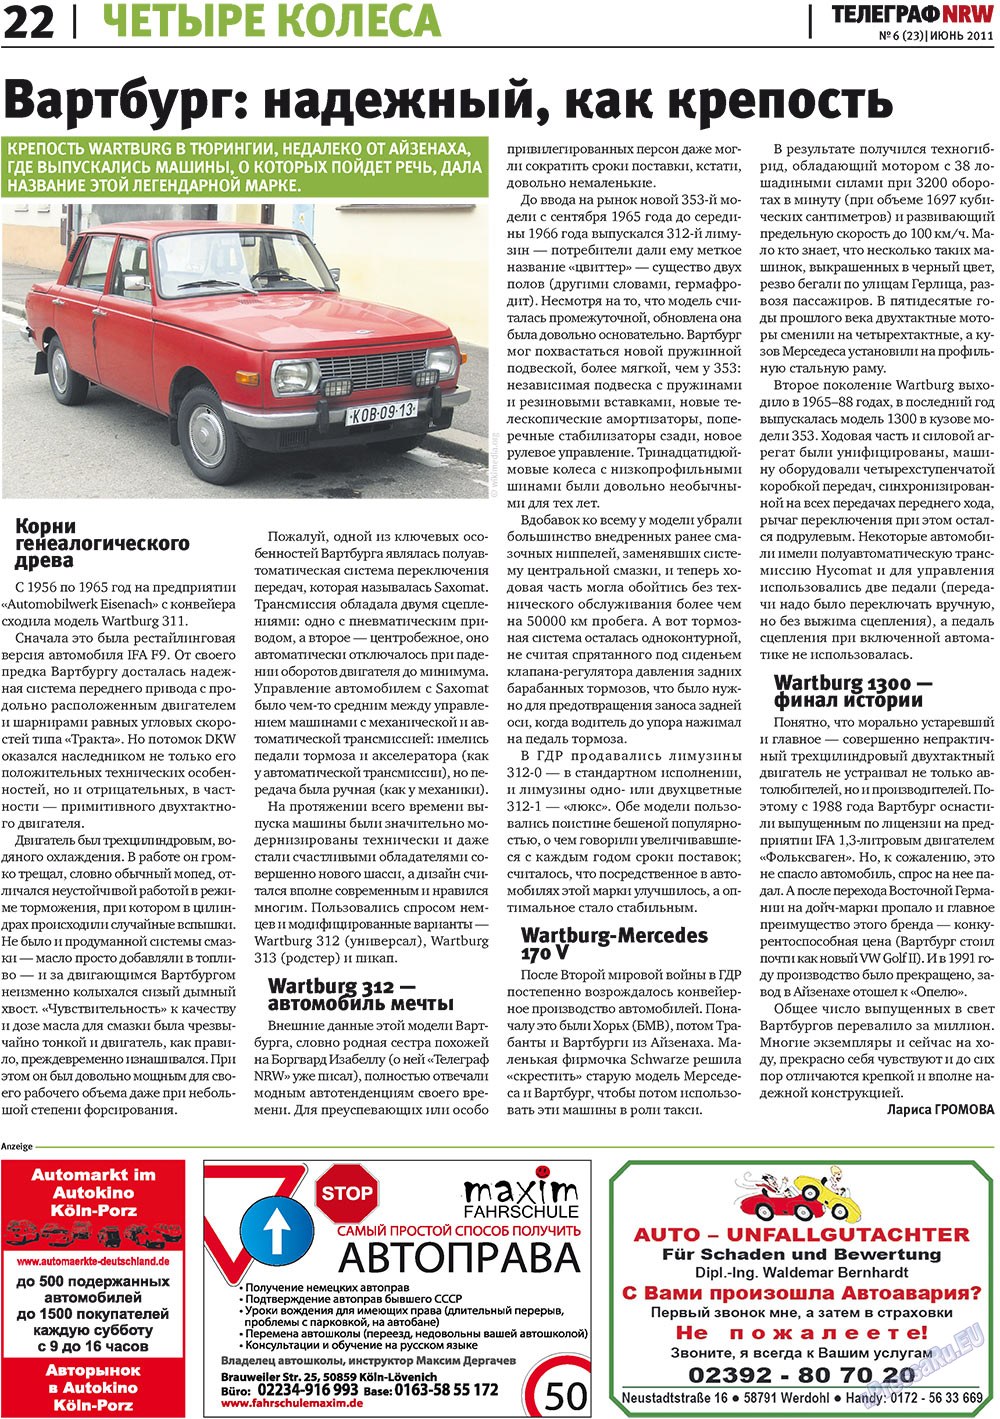 Телеграф NRW, газета. 2011 №6 стр.22